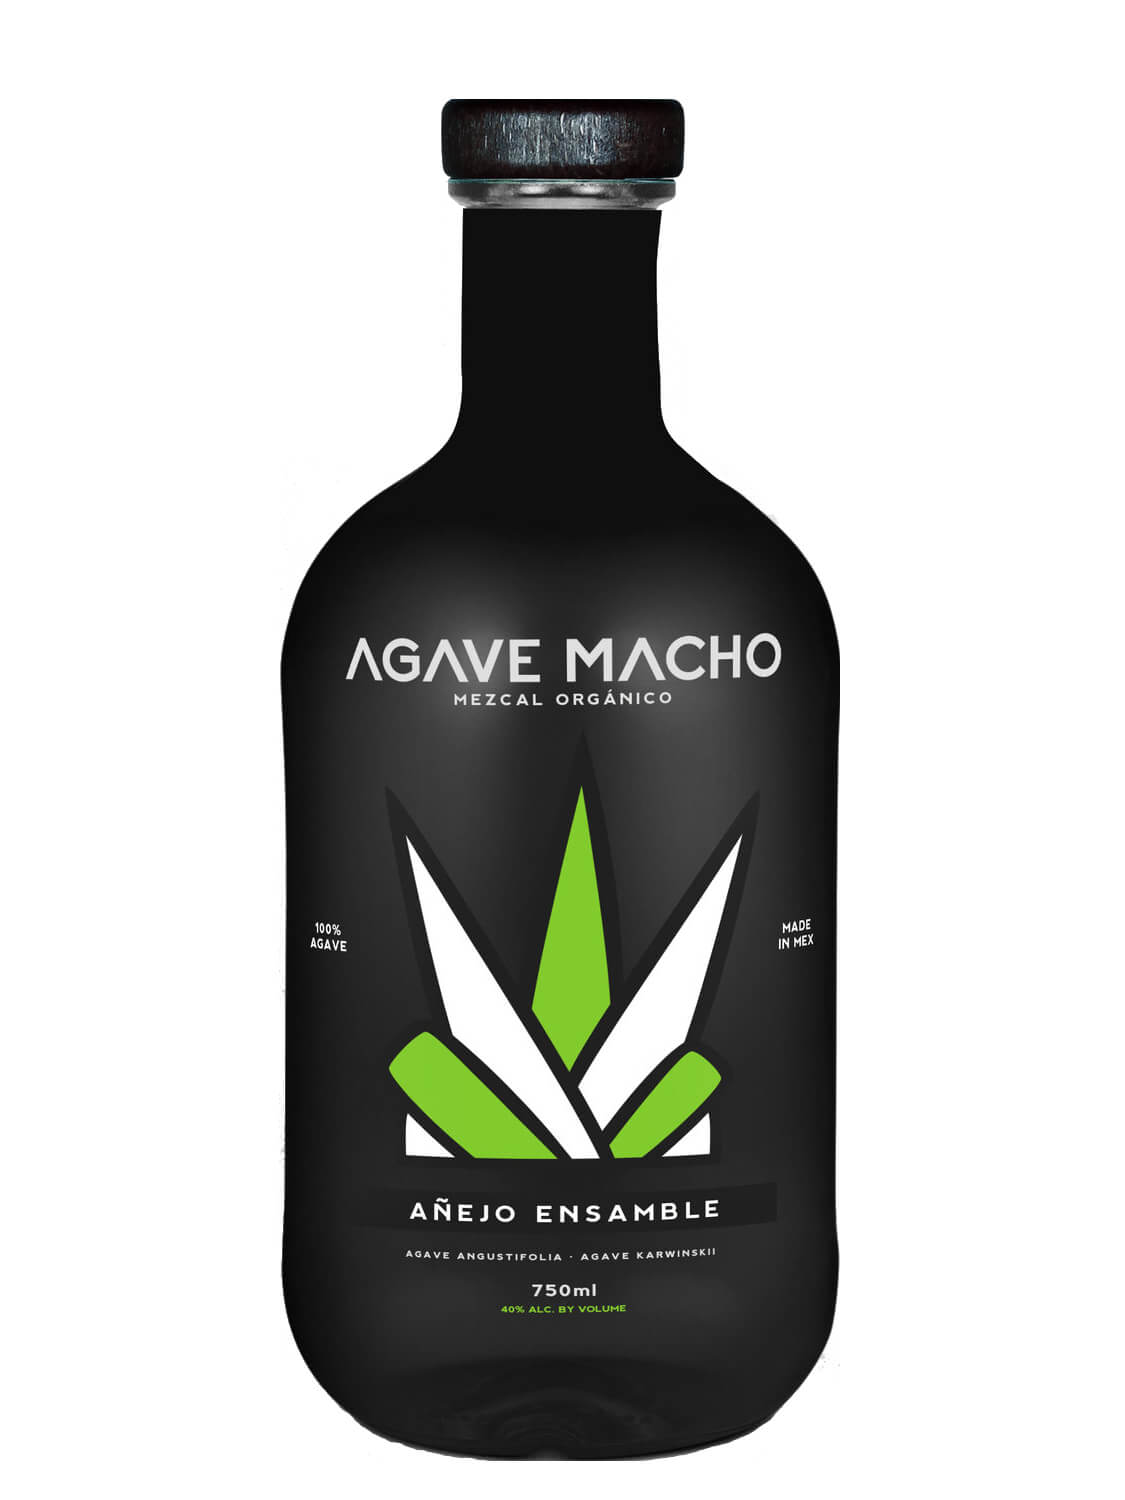 A bottle of Agave Macho Espadin-Cuishe ensamble añejo mezcal